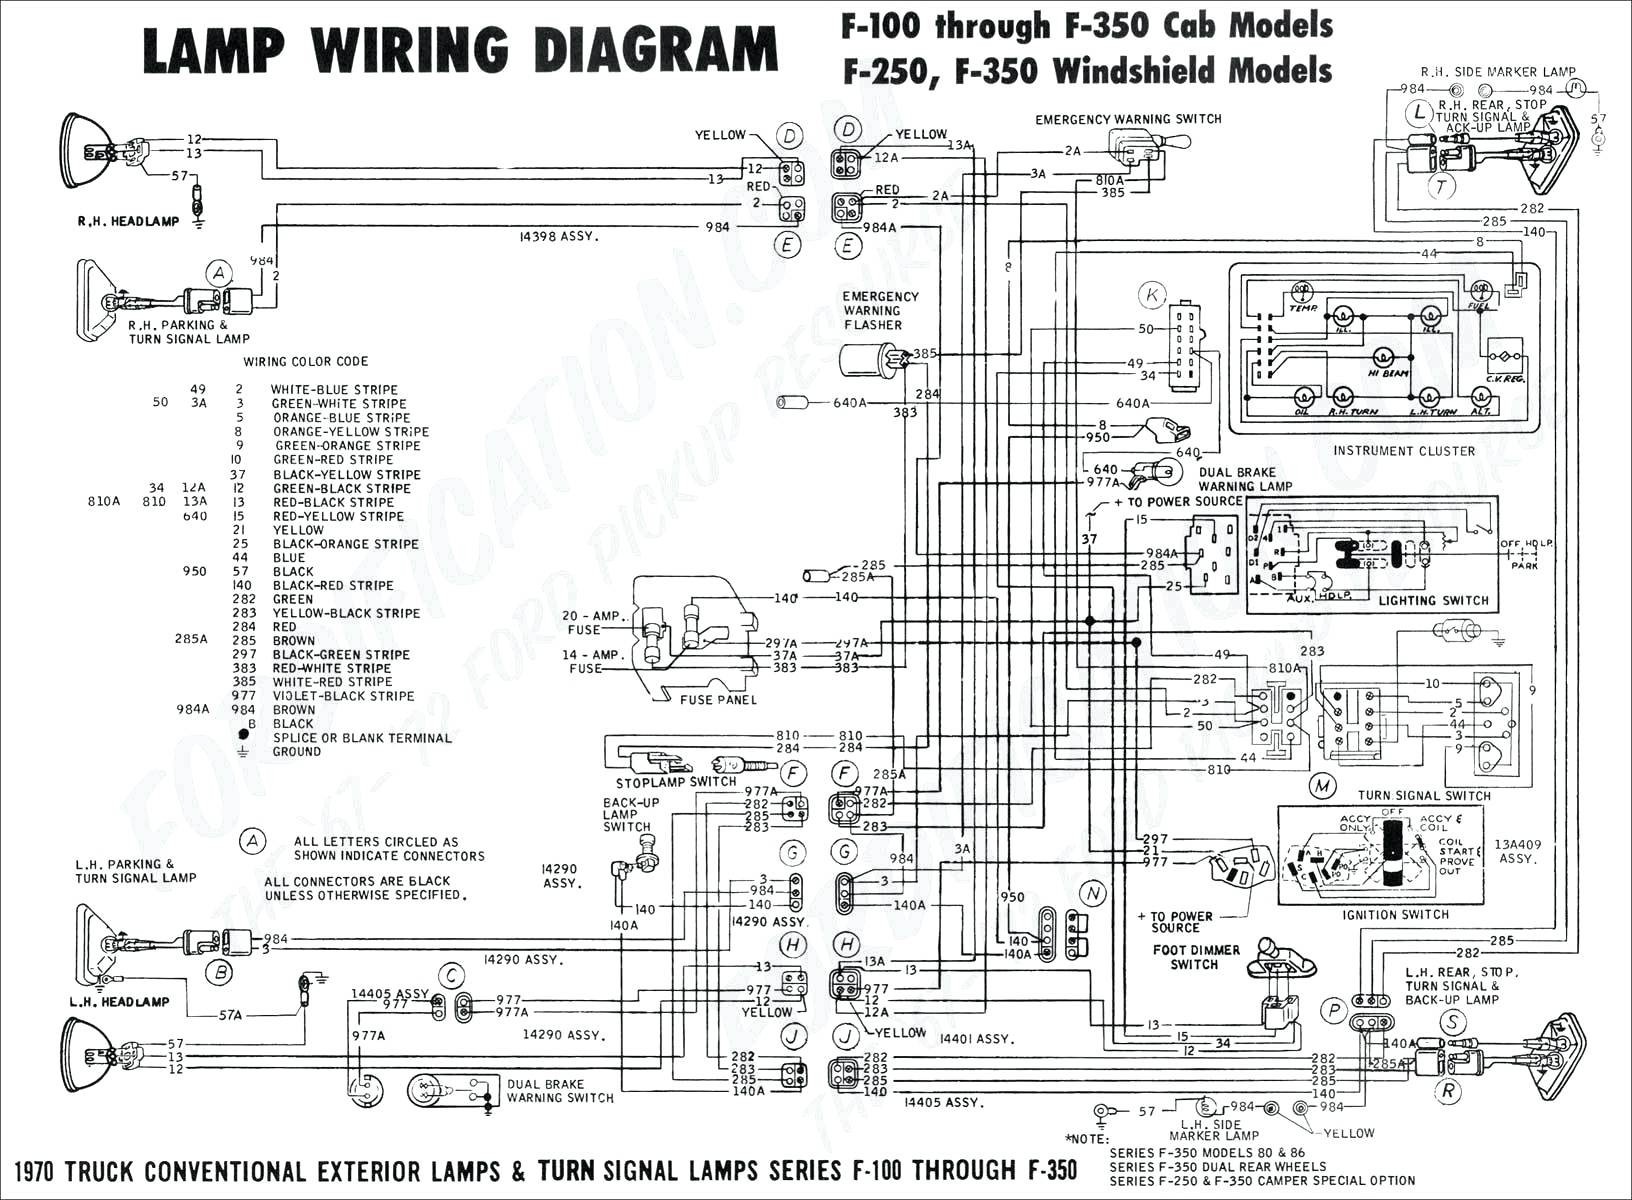 Static Phase Converter Wiring Diagram New Fresh Marathon Electric Motor Wiring Diagram 98 For 3 Phase